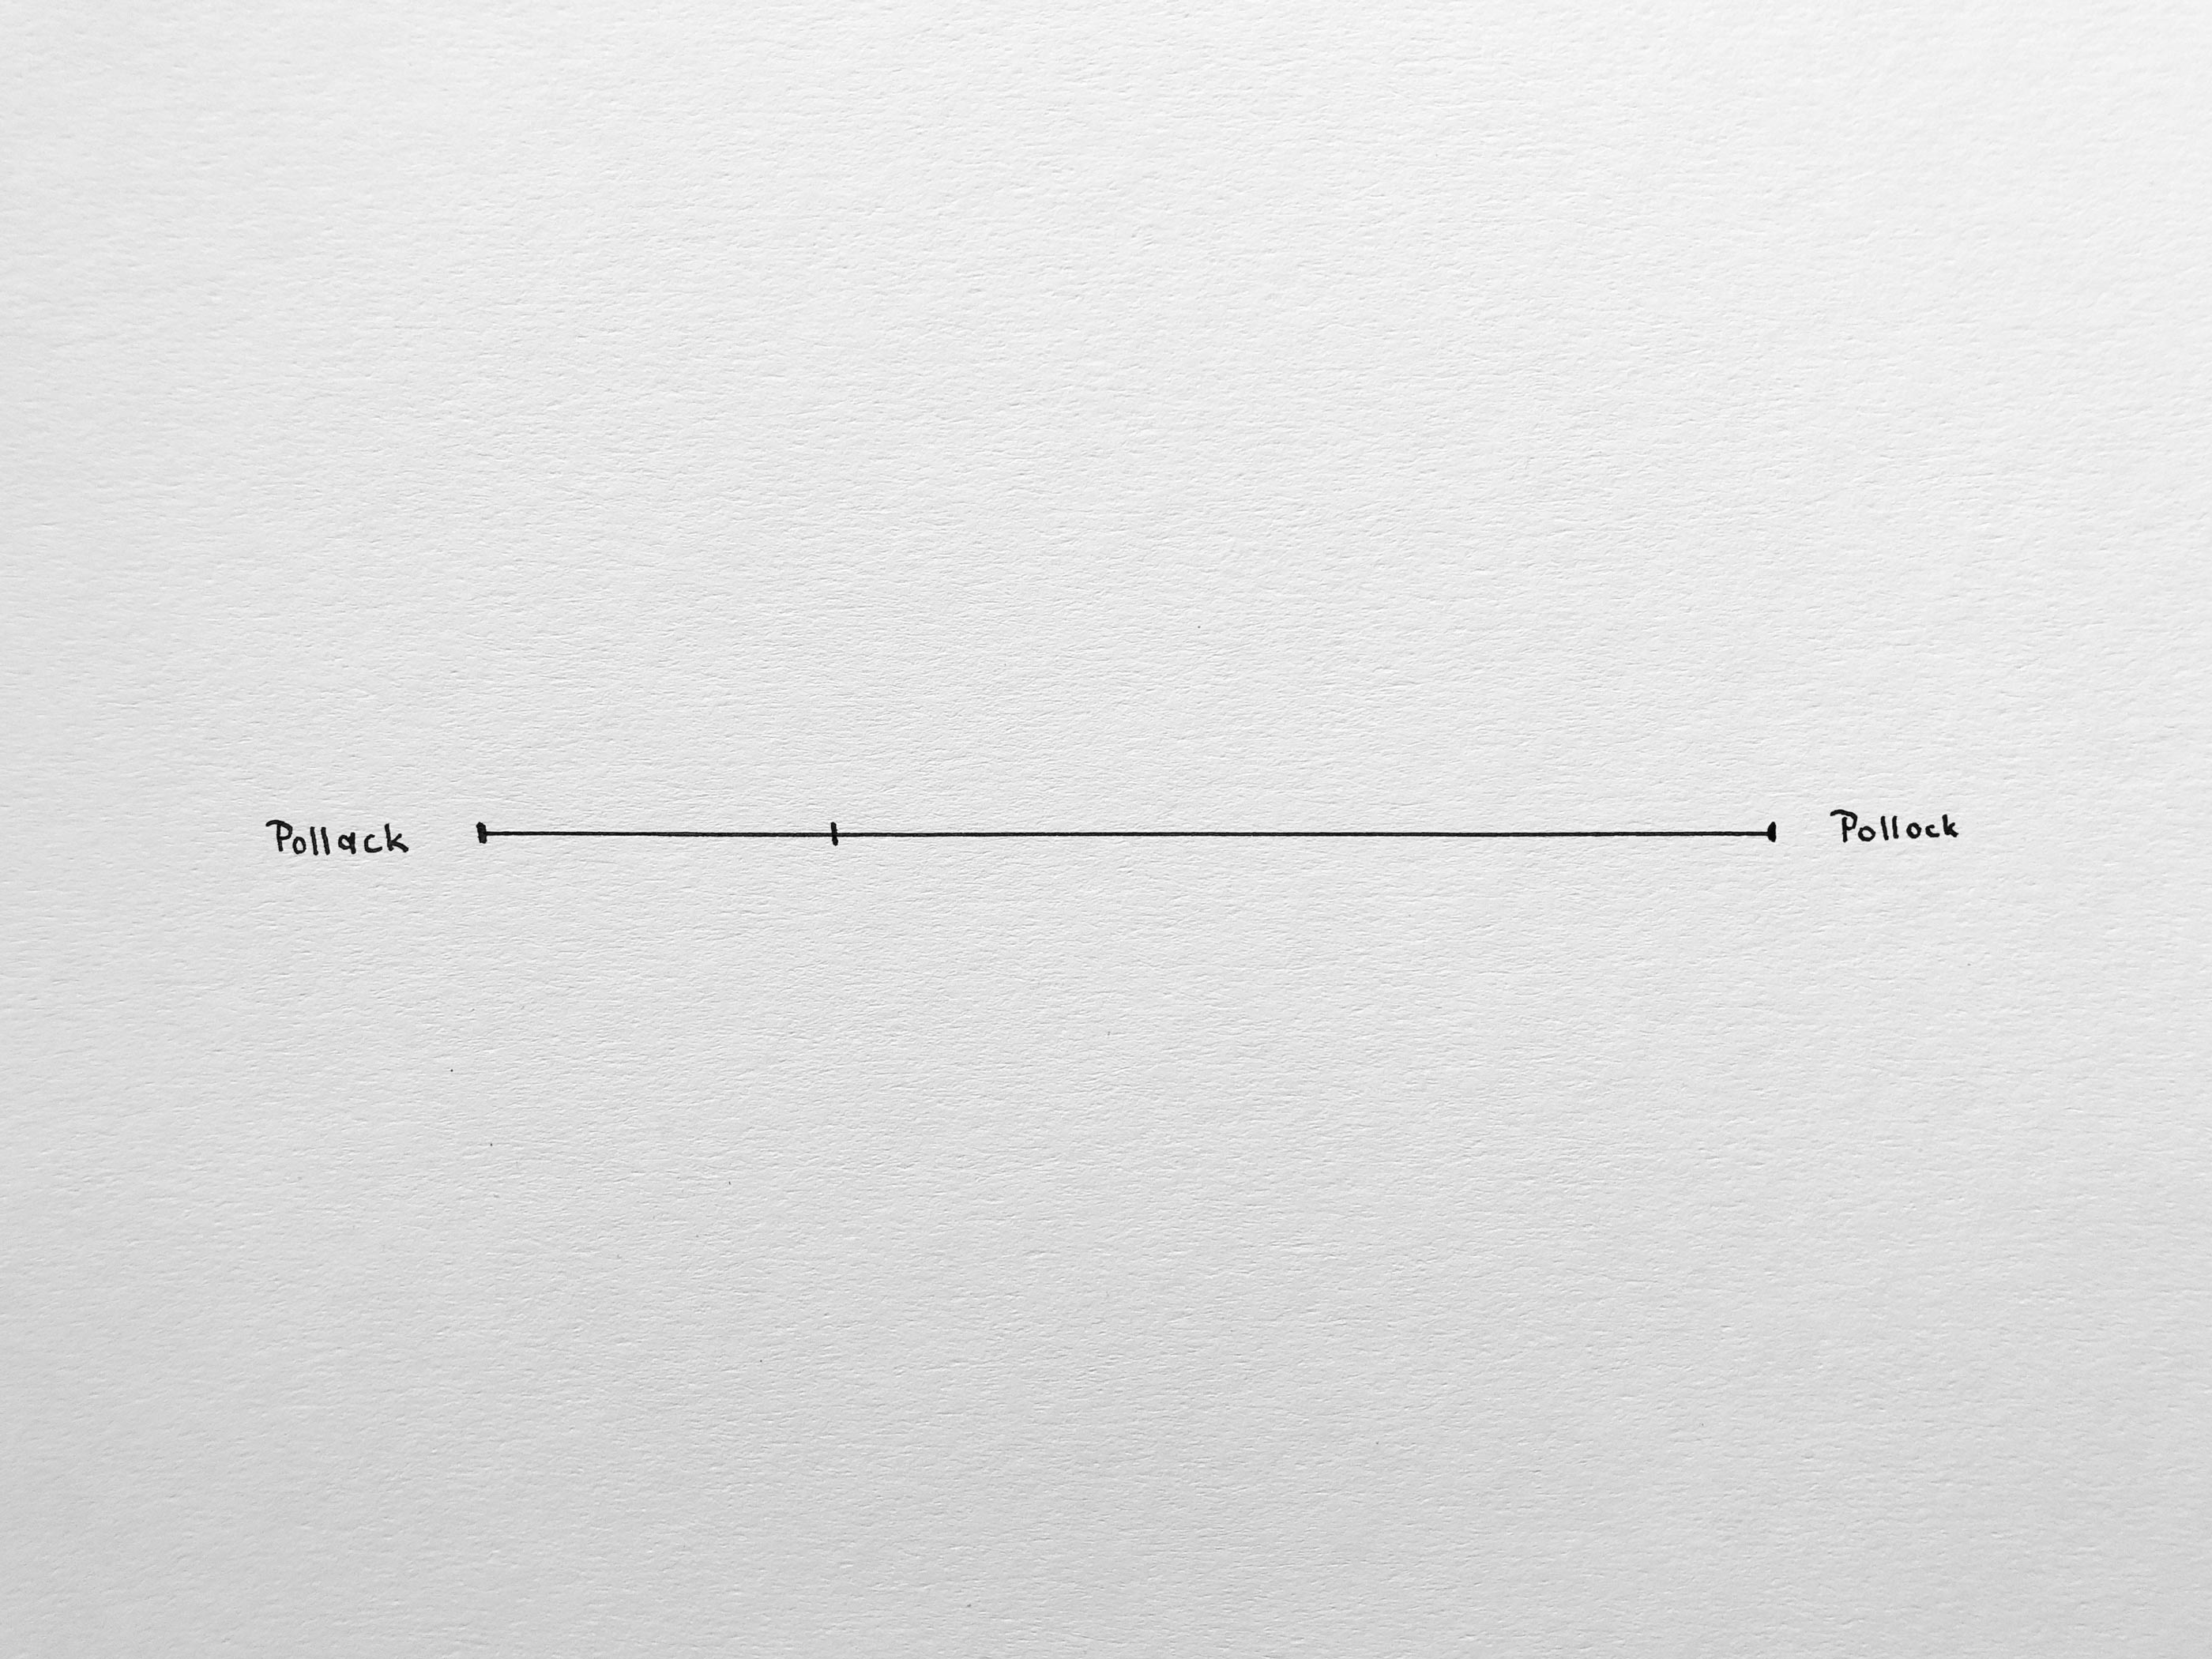 Odd Parameters: Pollack-Pollock, Pen on Paper, 32x24cm, 2018